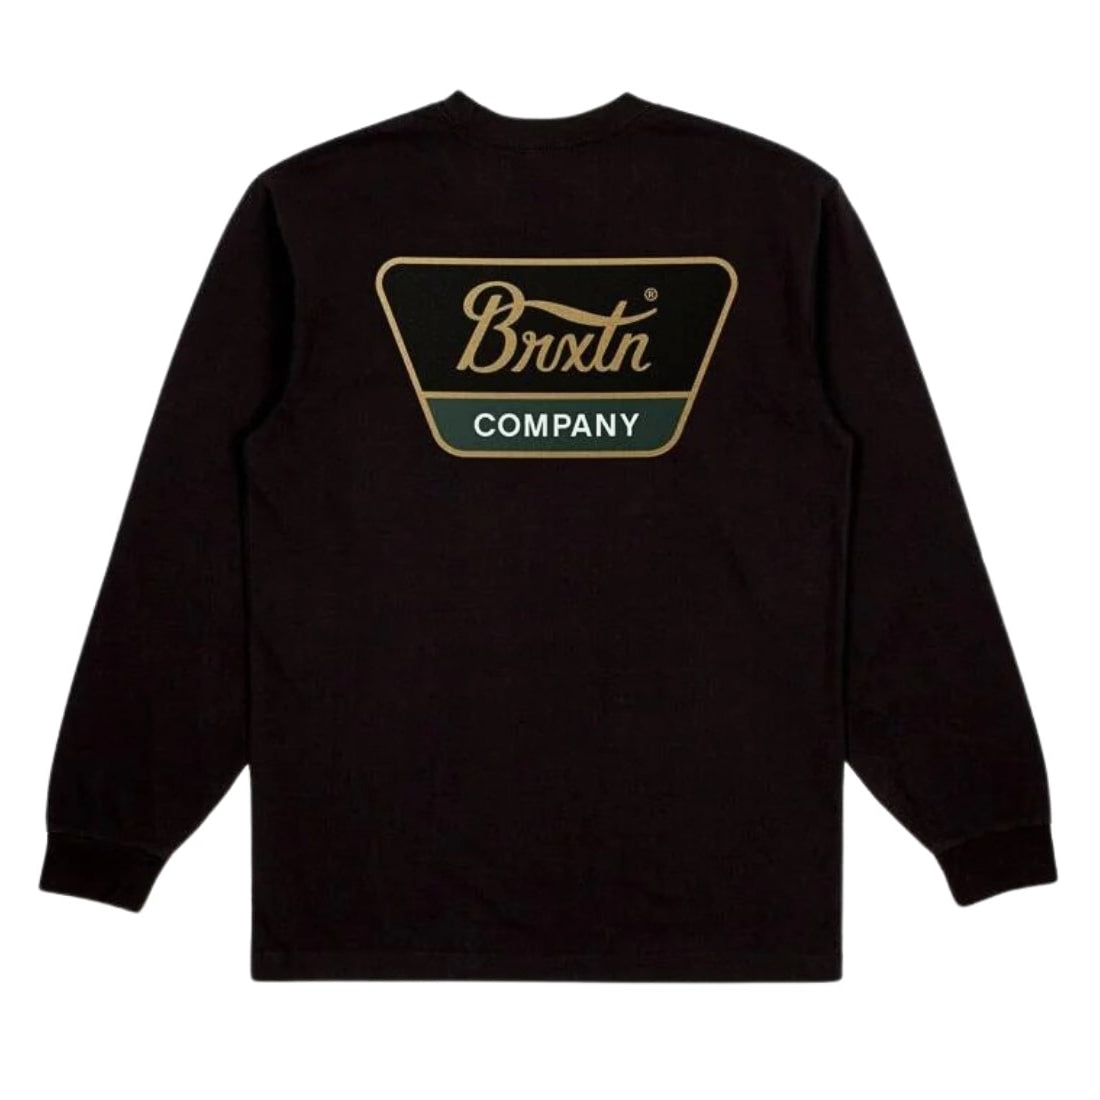 Brixton Linwood Longsleeve T-Shirt - Black/Antelope/Pine Needle - Mens Graphic T-Shirt by Brixton